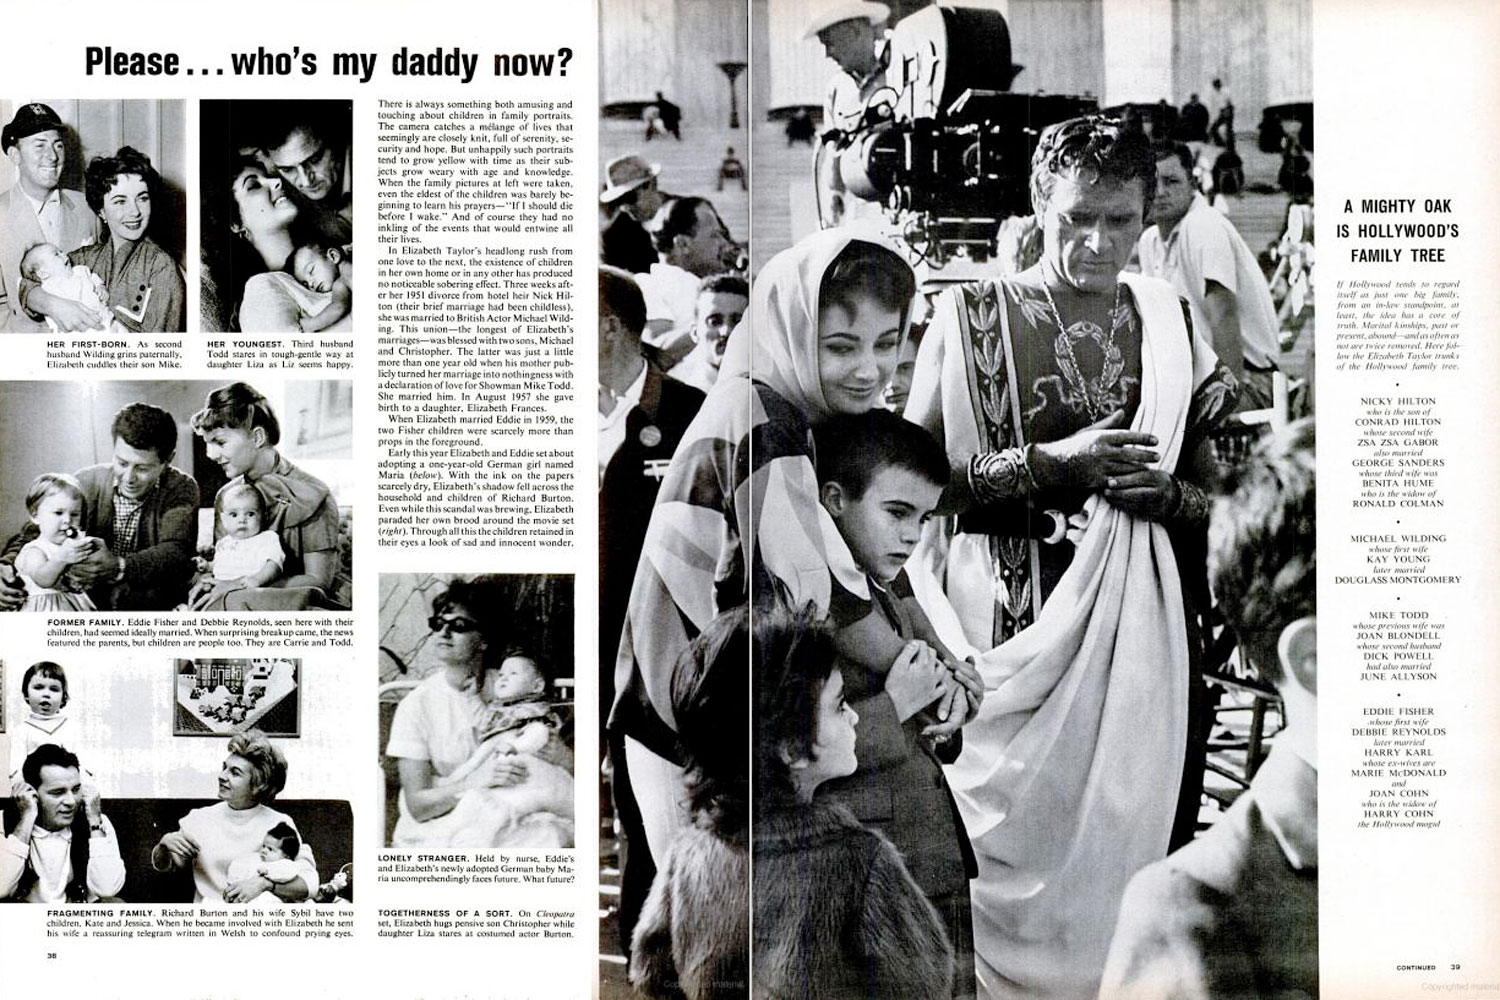 LIFE magazine, April 13, 1962.